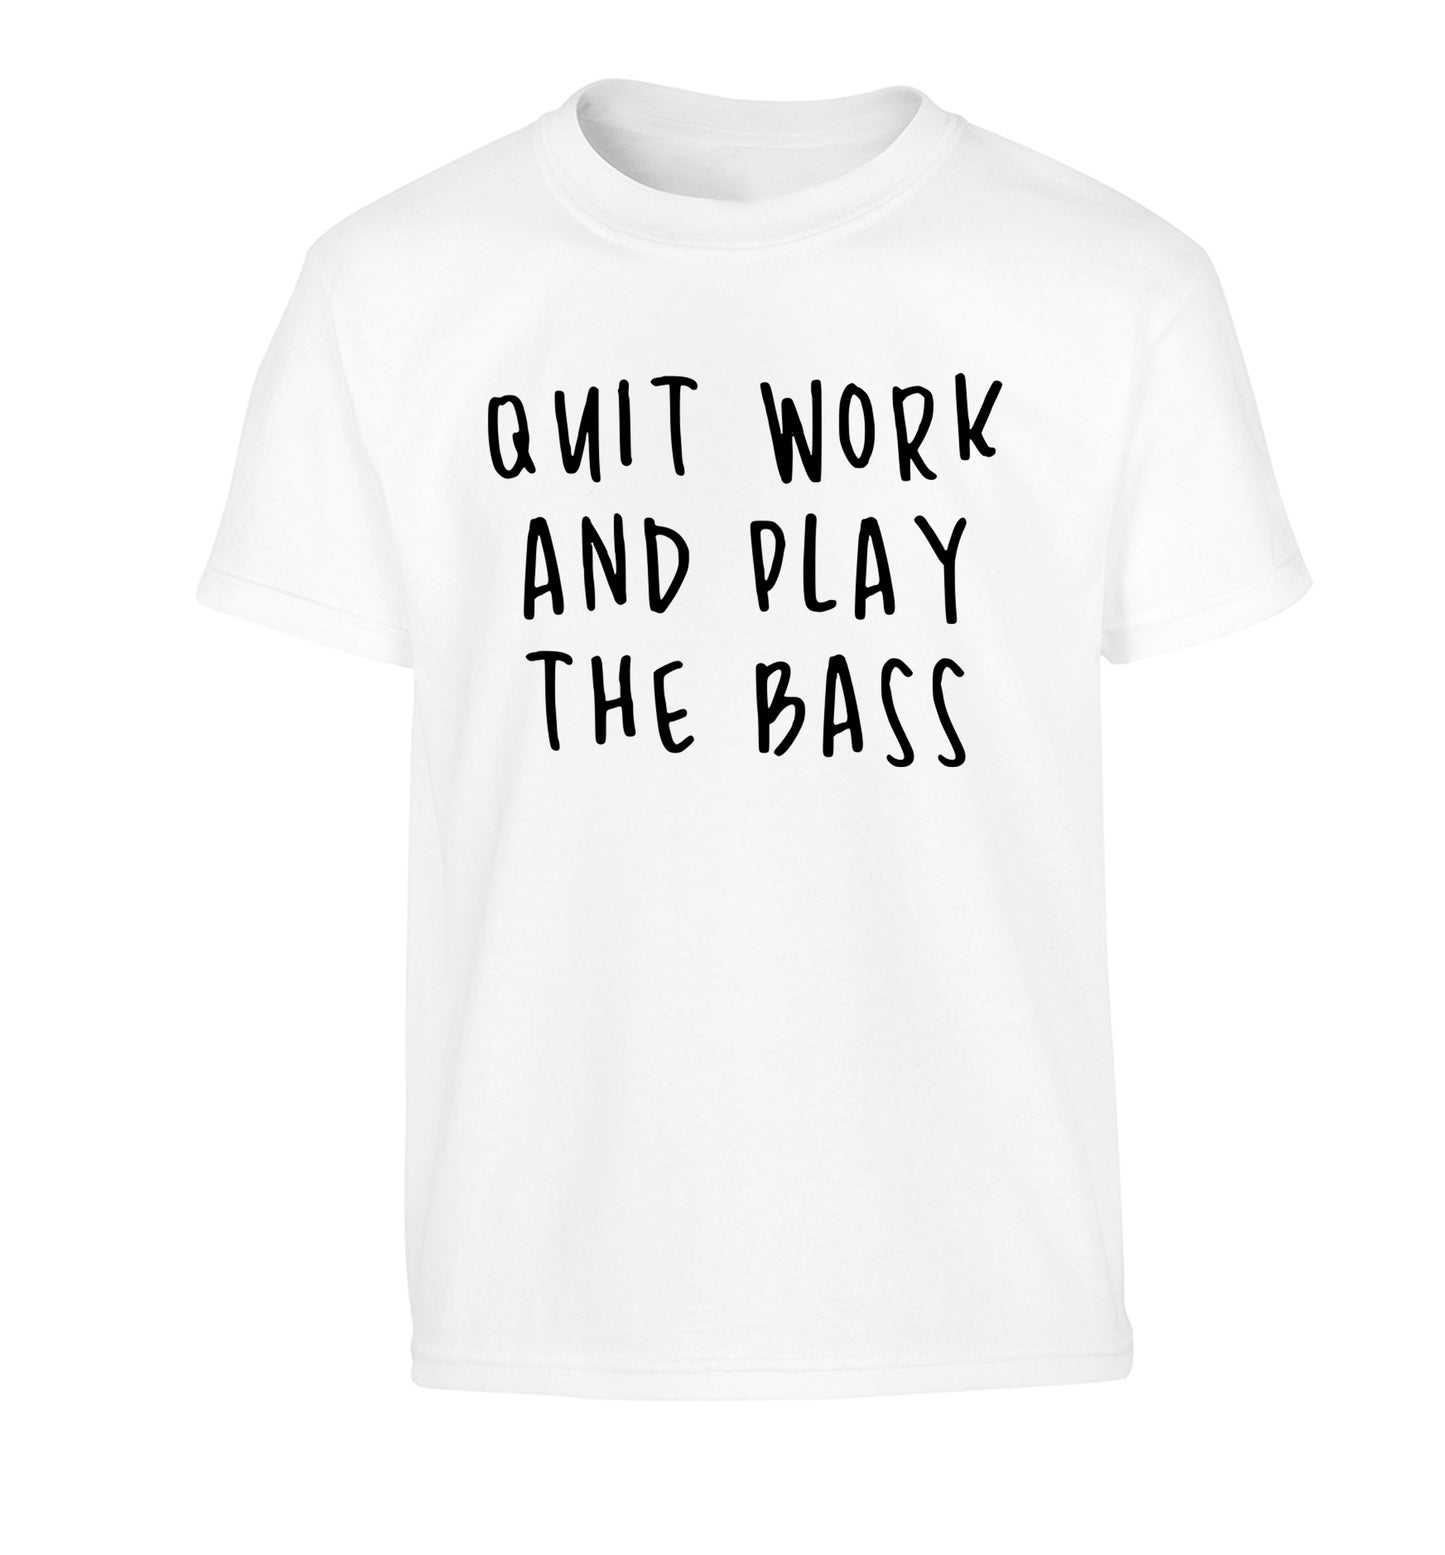 Quit work and play the bass Children's white Tshirt 12-14 Years